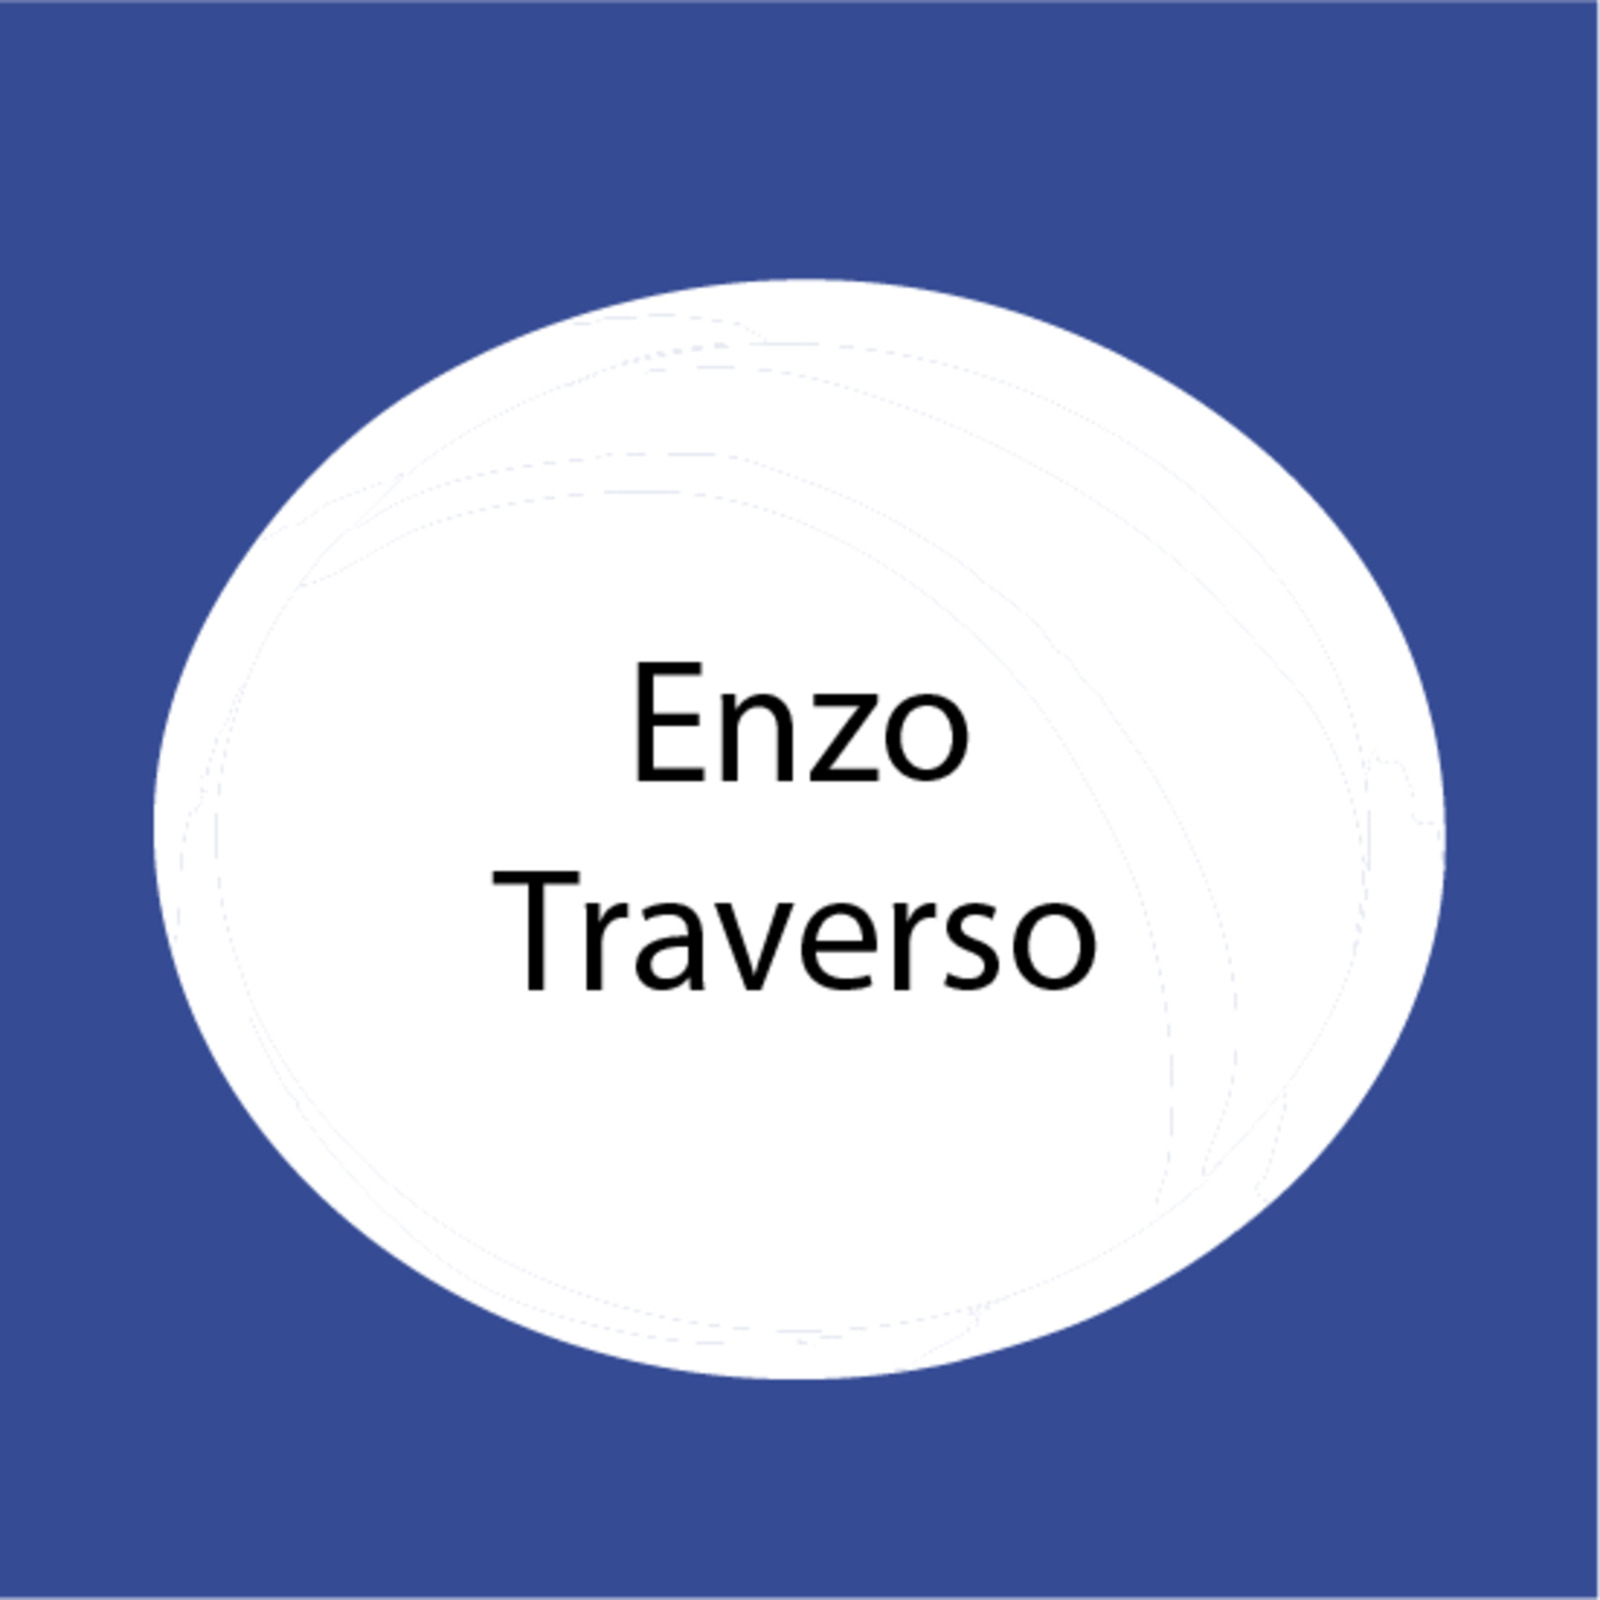 Enzo Traverso .png